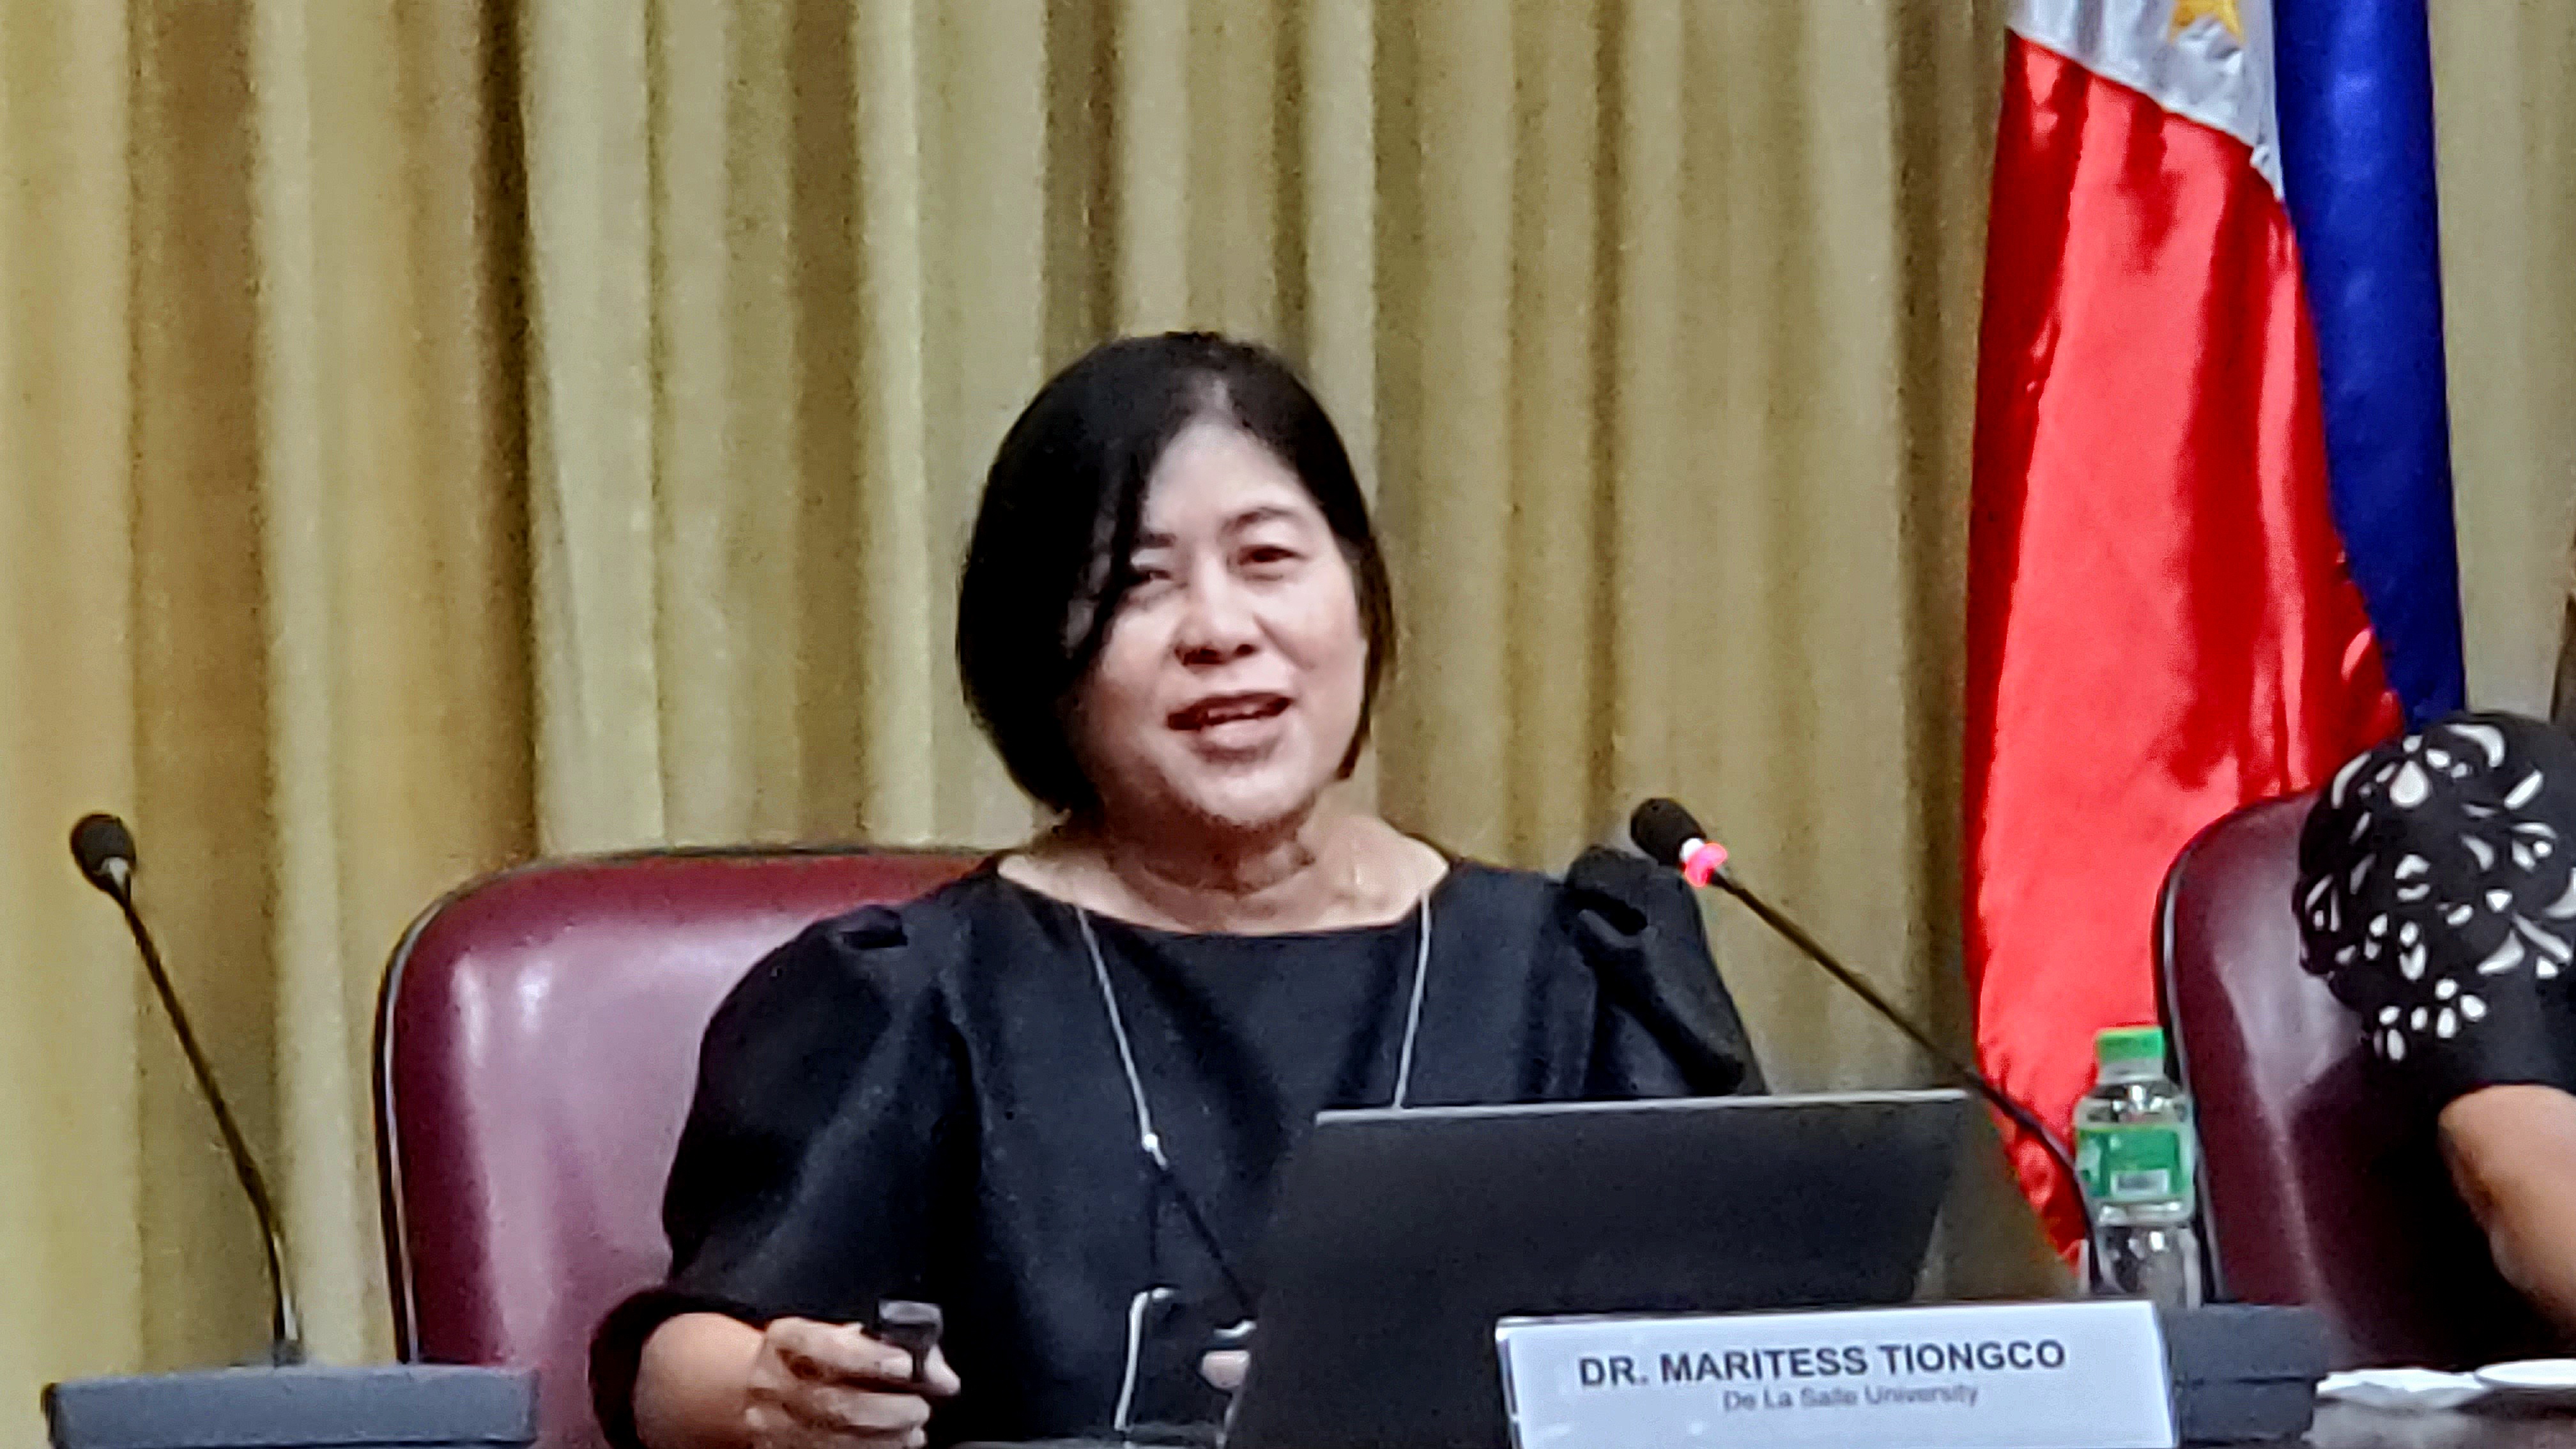 Dr. Marites Tiongco